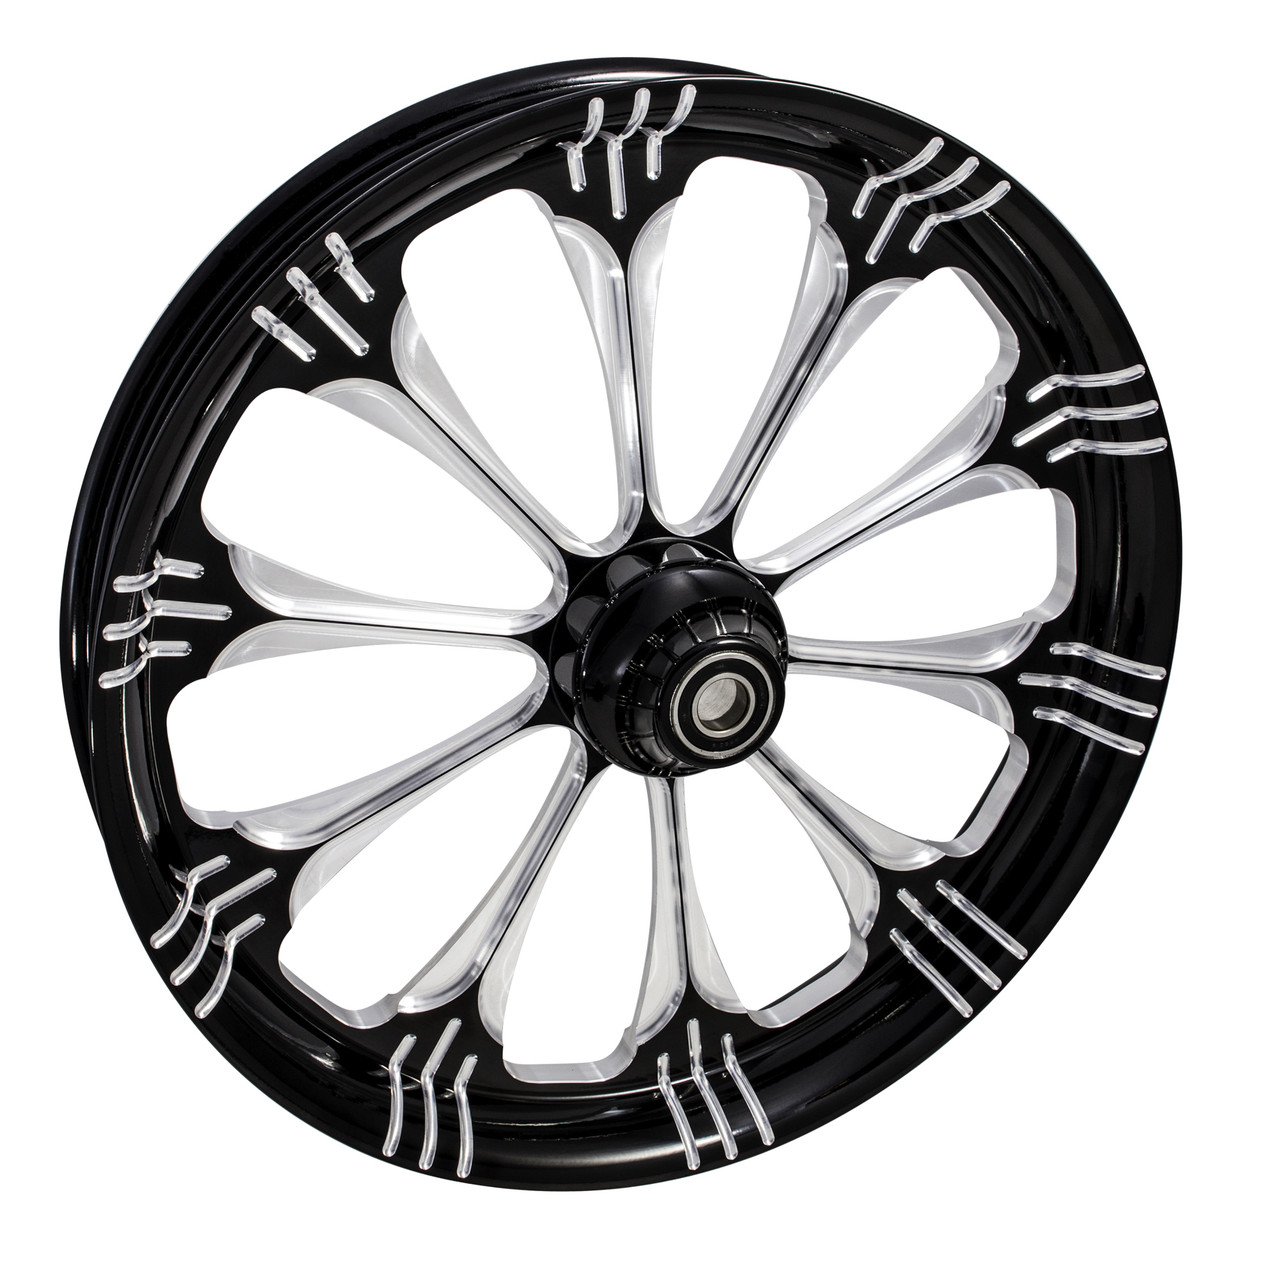 Harley Davidson Black Contrast Wide Tire Front Wheel - Warlock